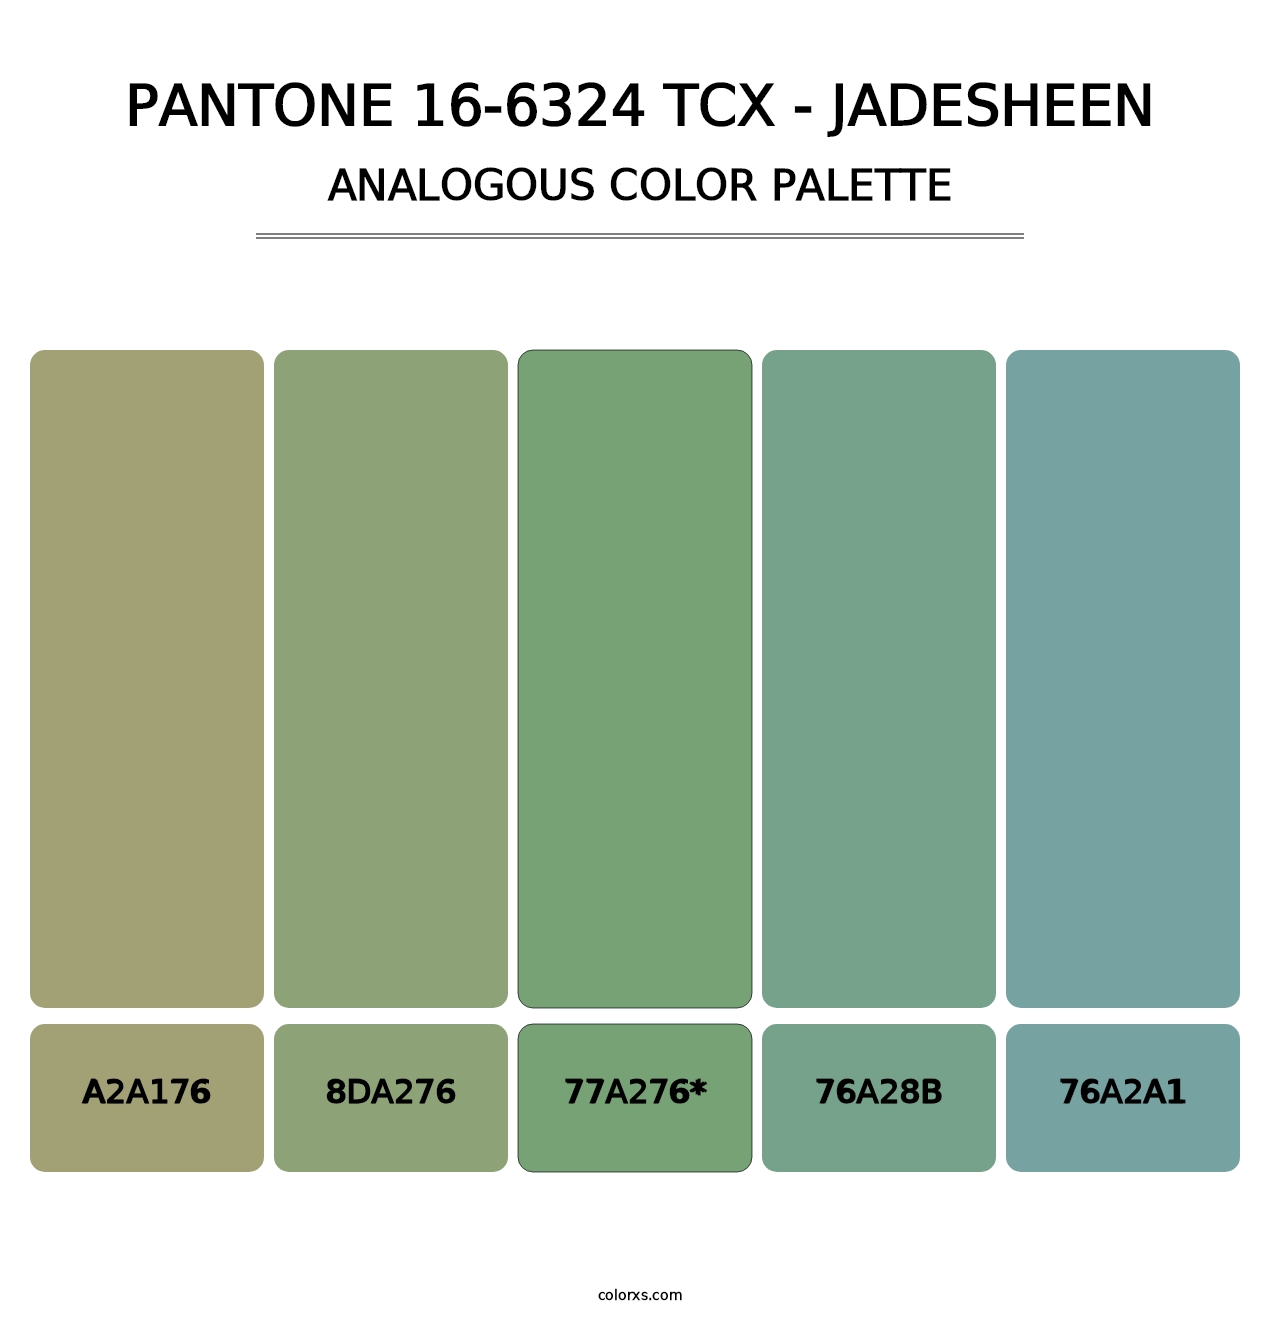 PANTONE 16-6324 TCX - Jadesheen - Analogous Color Palette